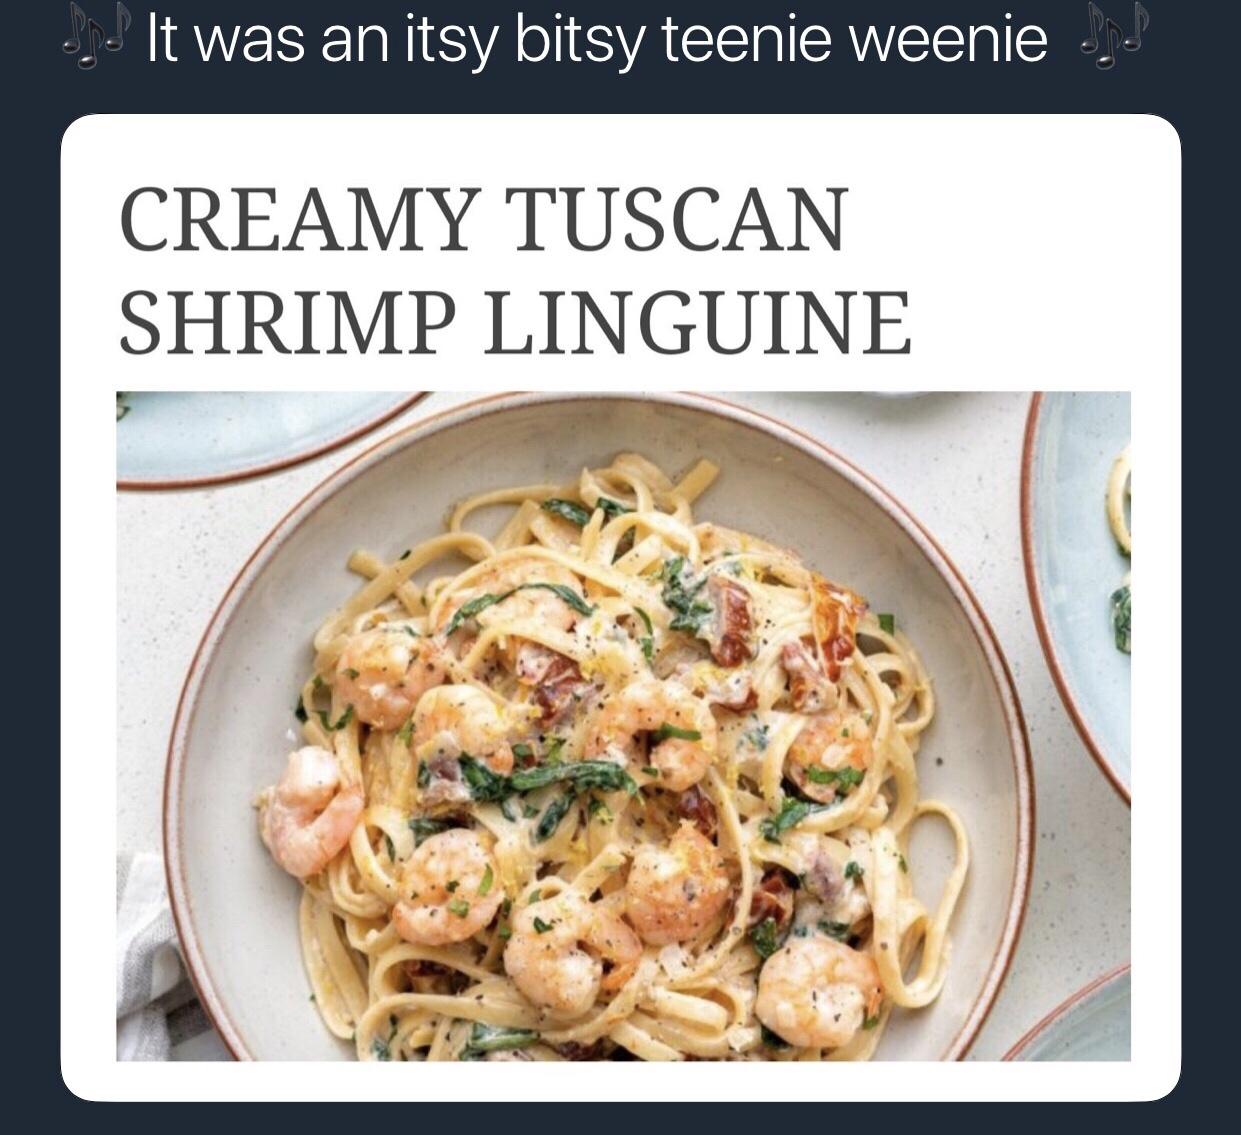 dank memes - funny memes - shrimp tuscany - It was an itsy bitsy teenie weenie Creamy Tuscan Shrimp Linguine